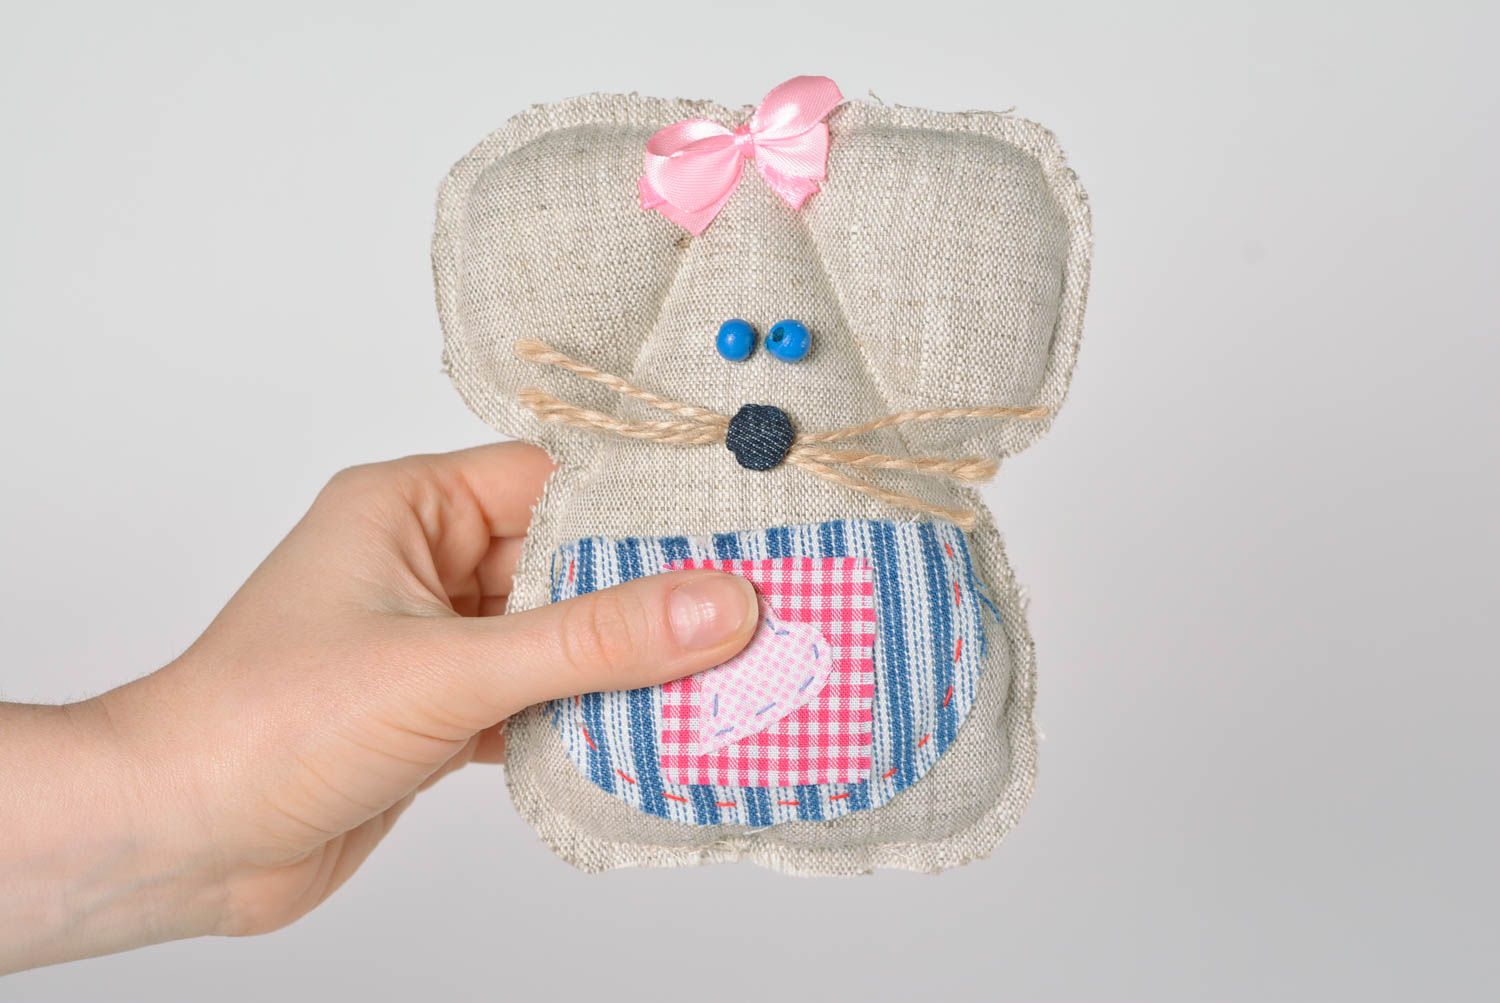 Handmade soft toy decorative stuffed toy present for children nursery decor photo 3